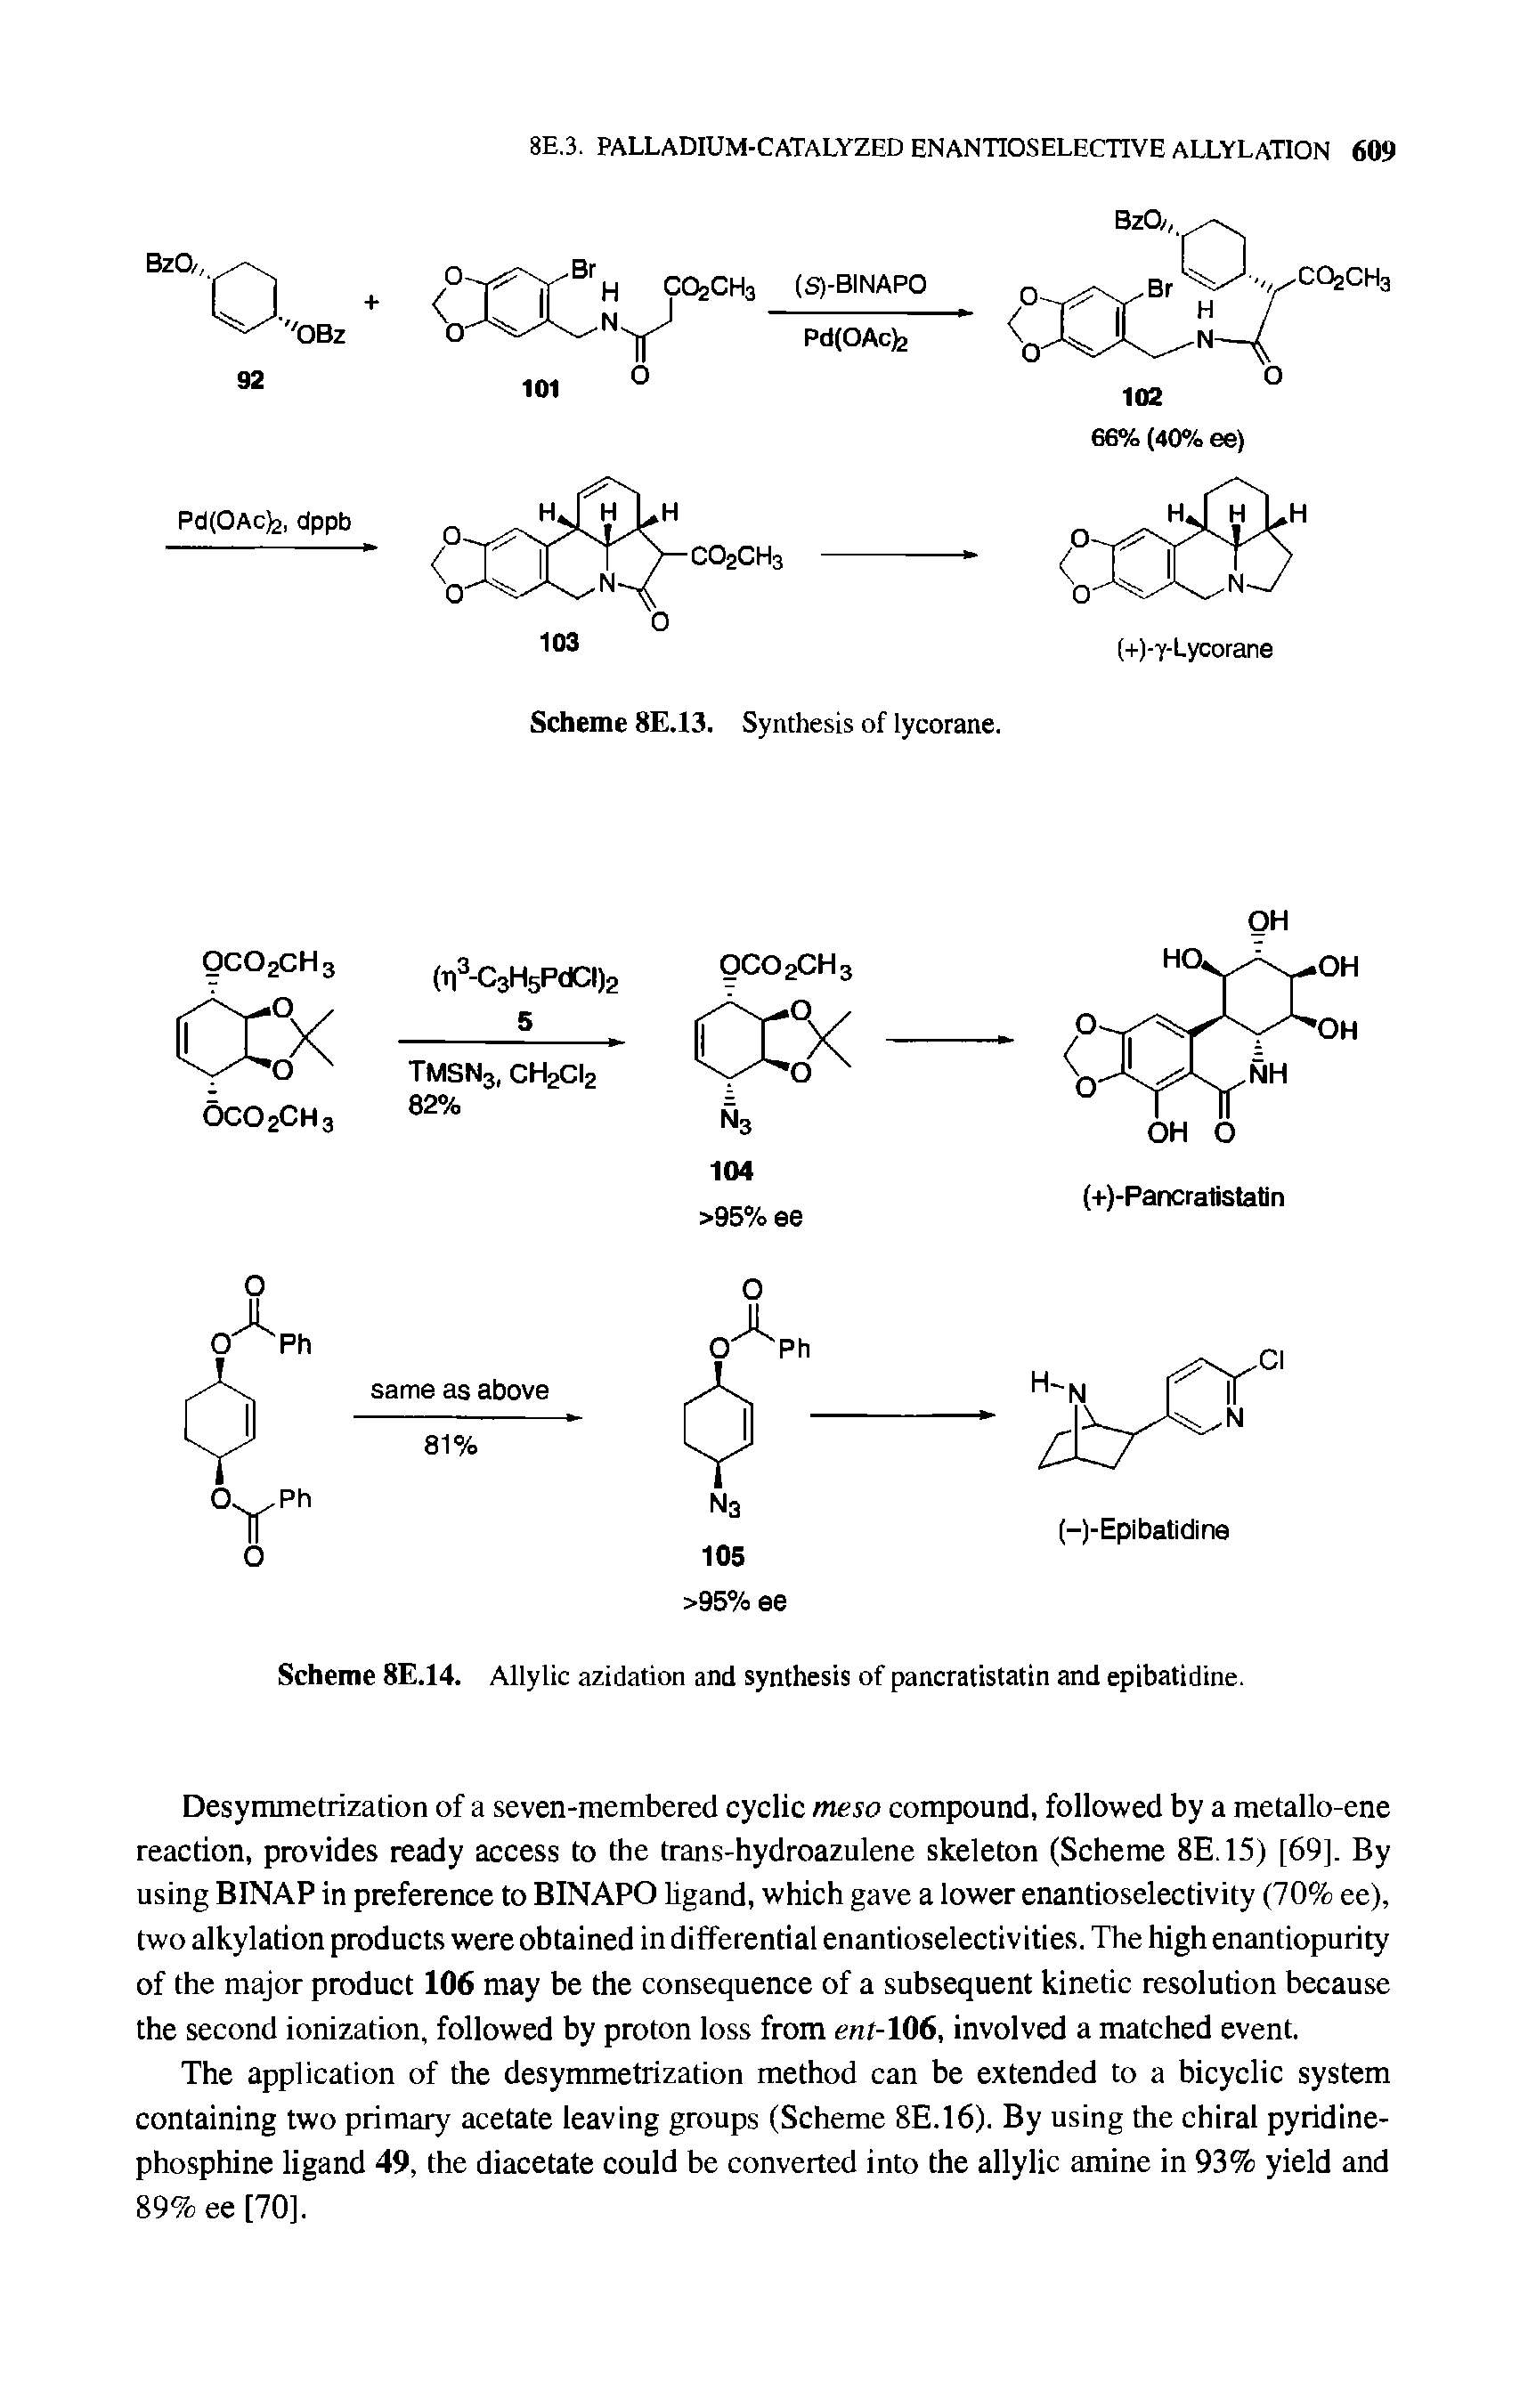 Scheme 8E.14. Allylic azidation and synthesis of pancratistatin and epibatidine.